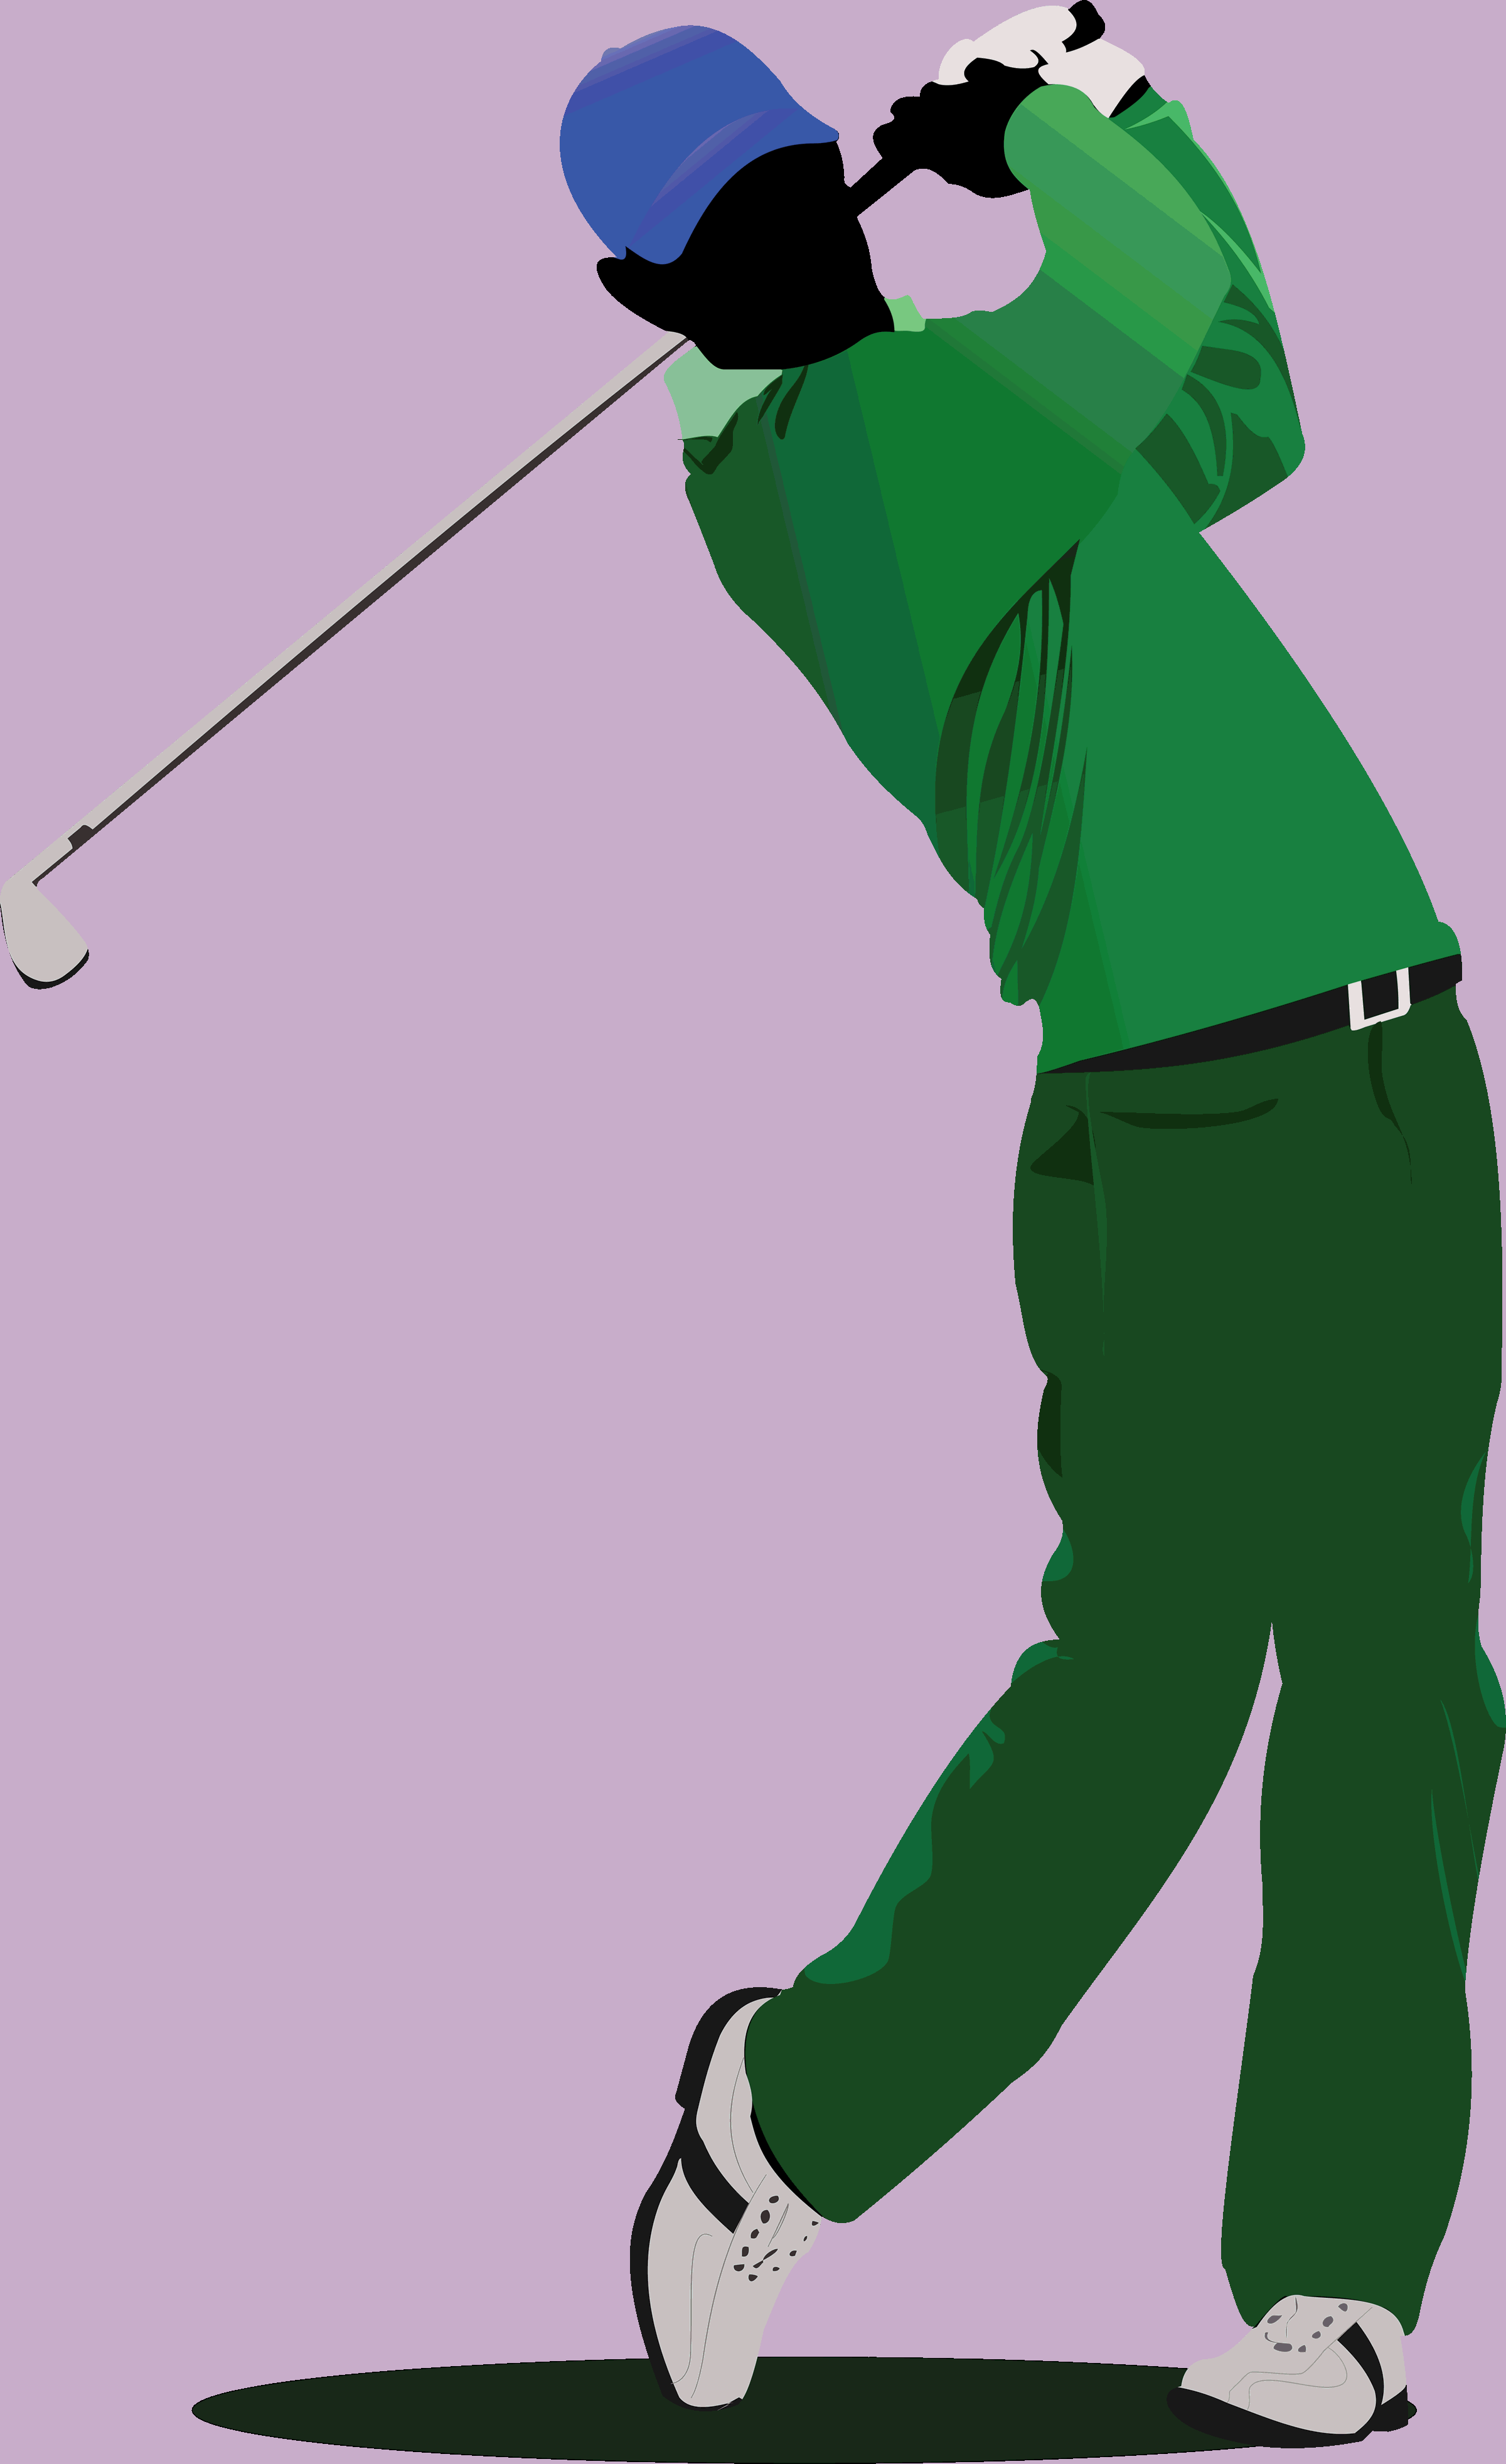 Golfer Silhouette Clip Art